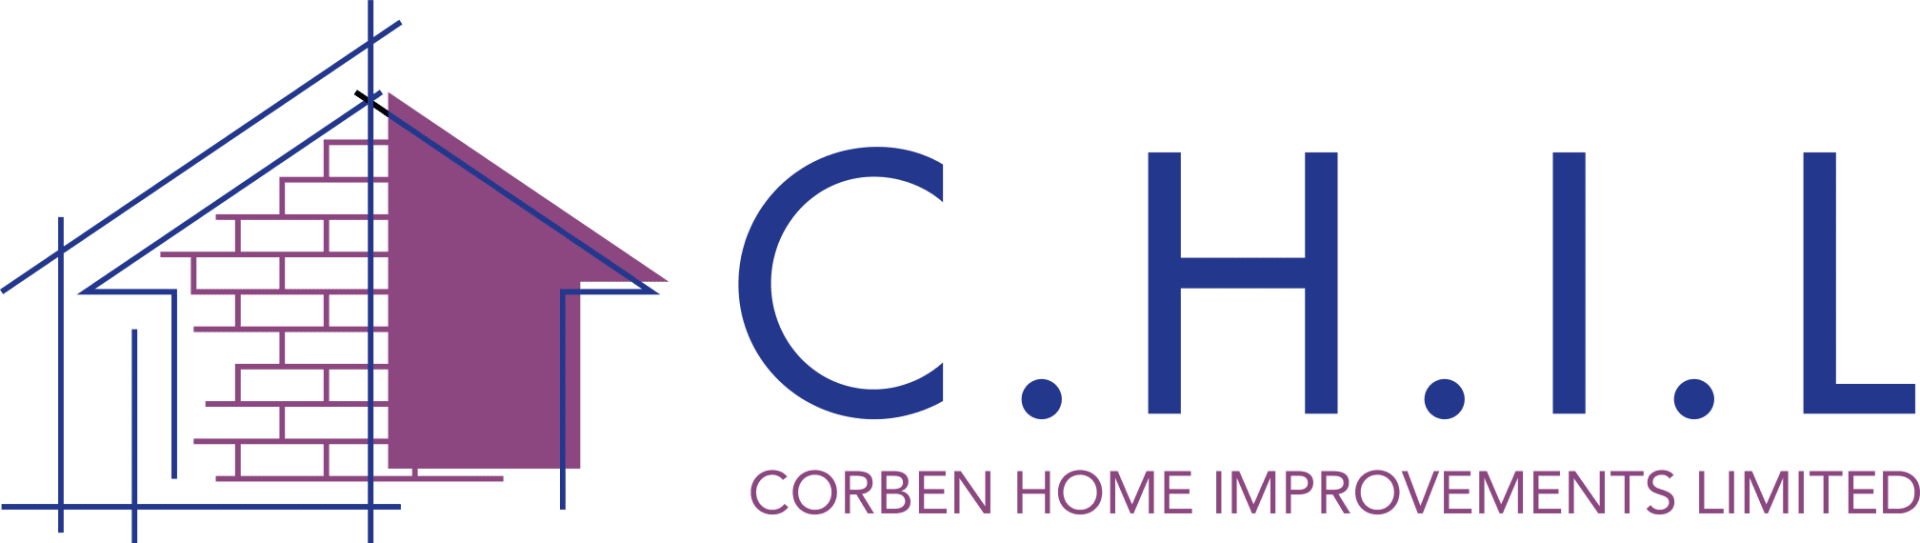 Corben Home Improvements Limited Logo